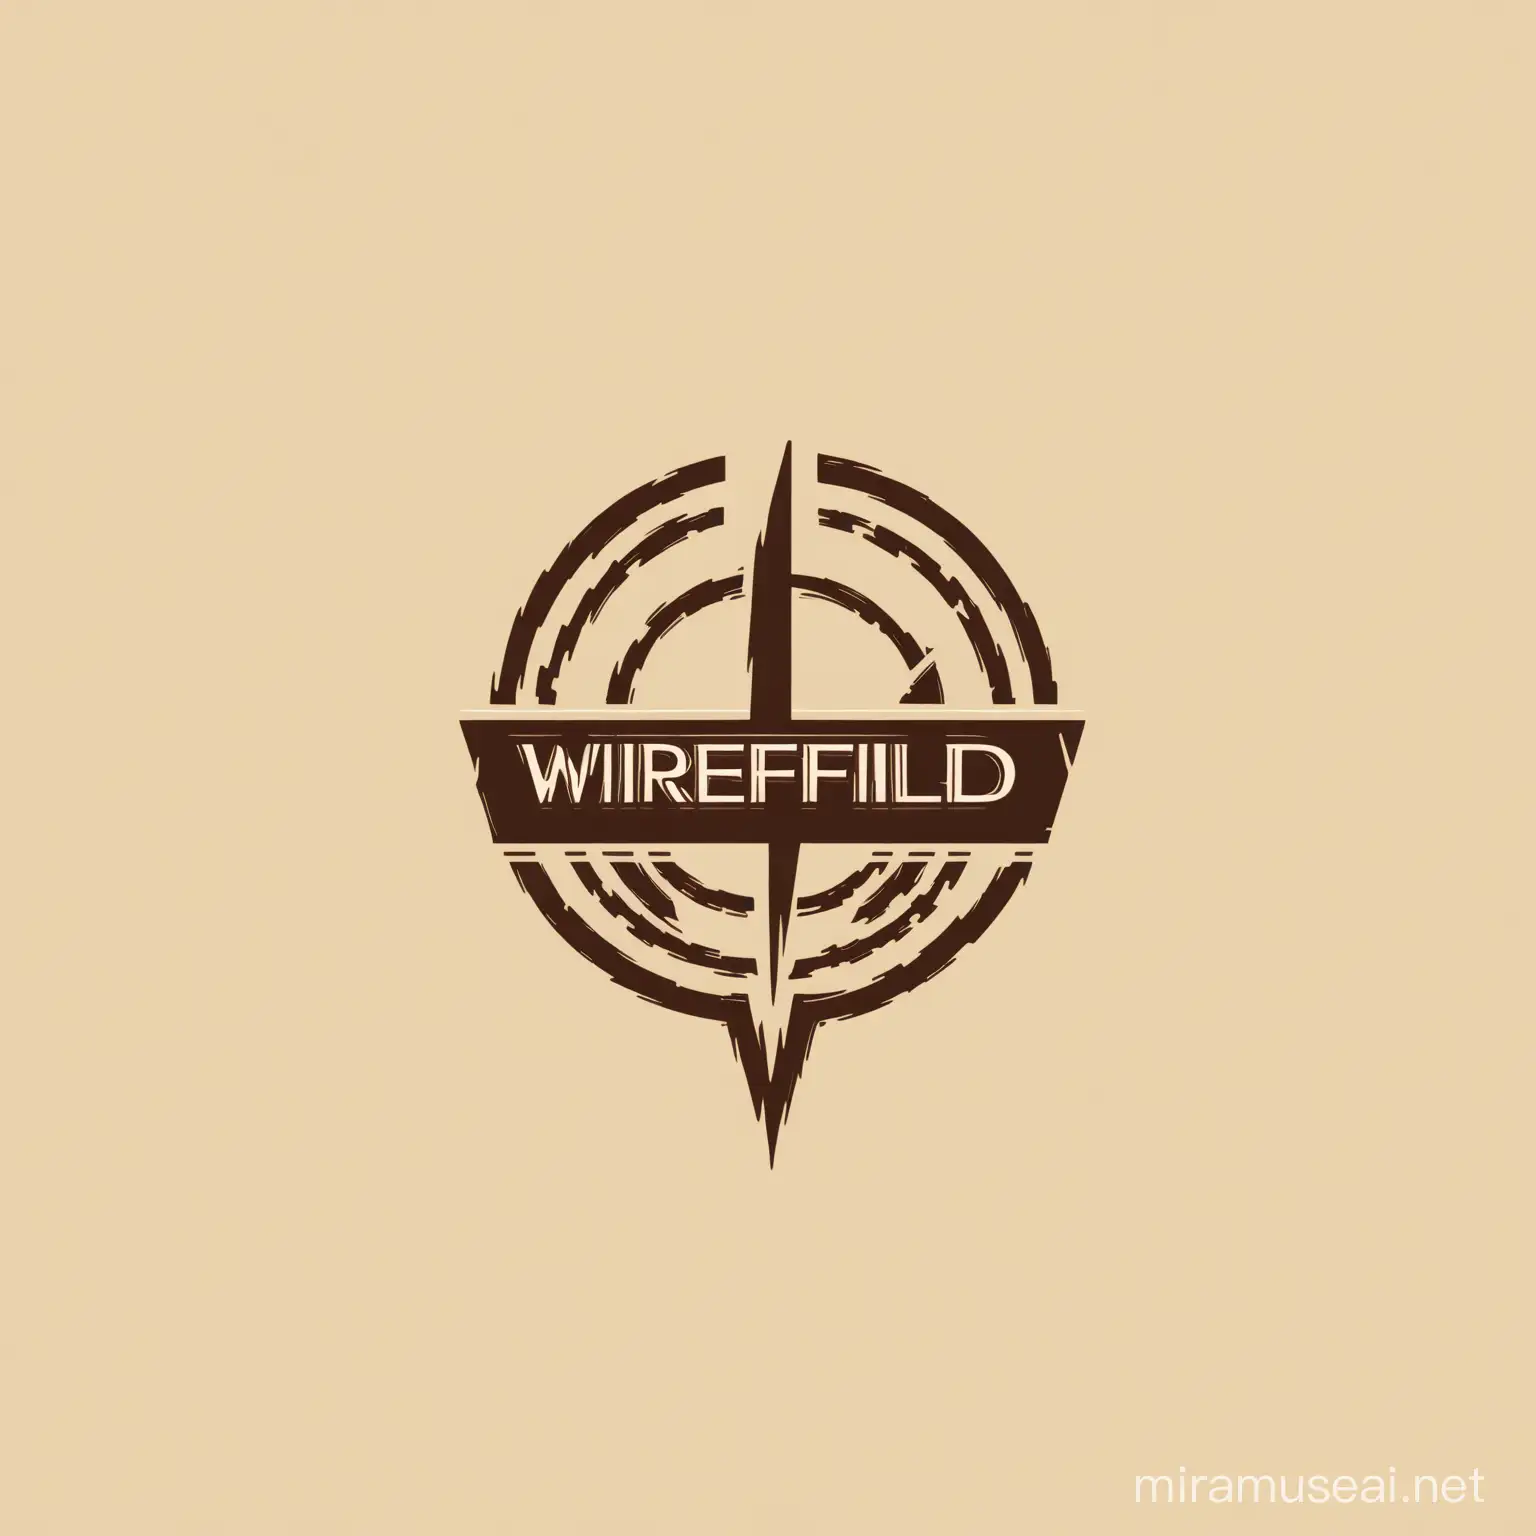 Company logo: Wirefield Electric